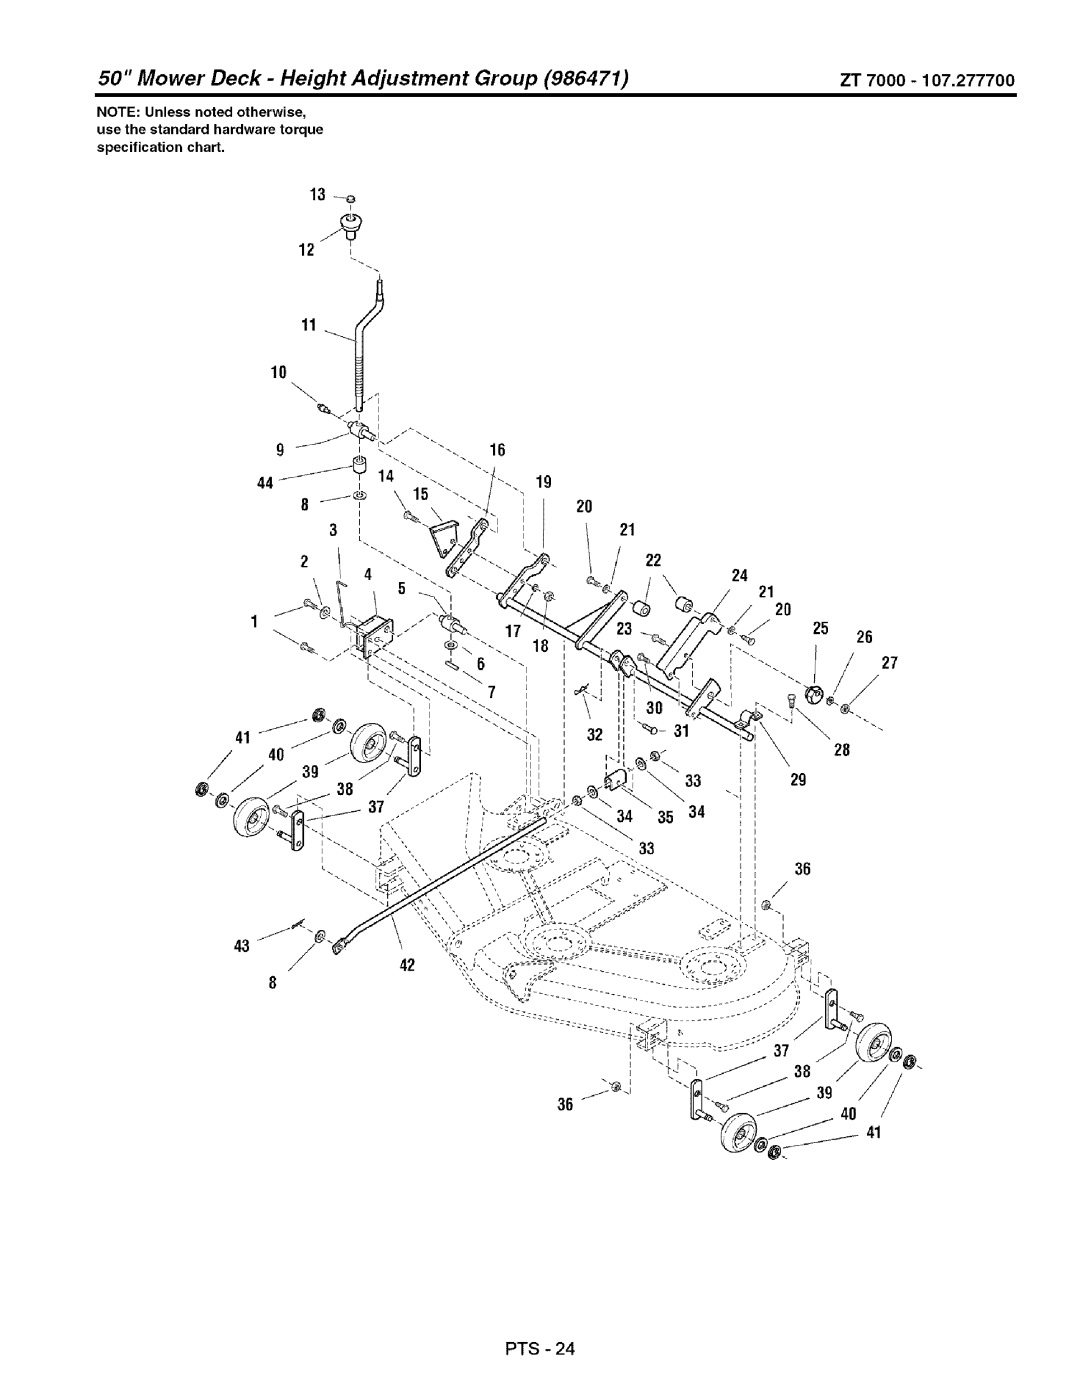 Craftsman 107.2777 manual Mower Deck - Height Adjustment Group, ZT 7000, 20 21 22 24, 26 27, Pts 